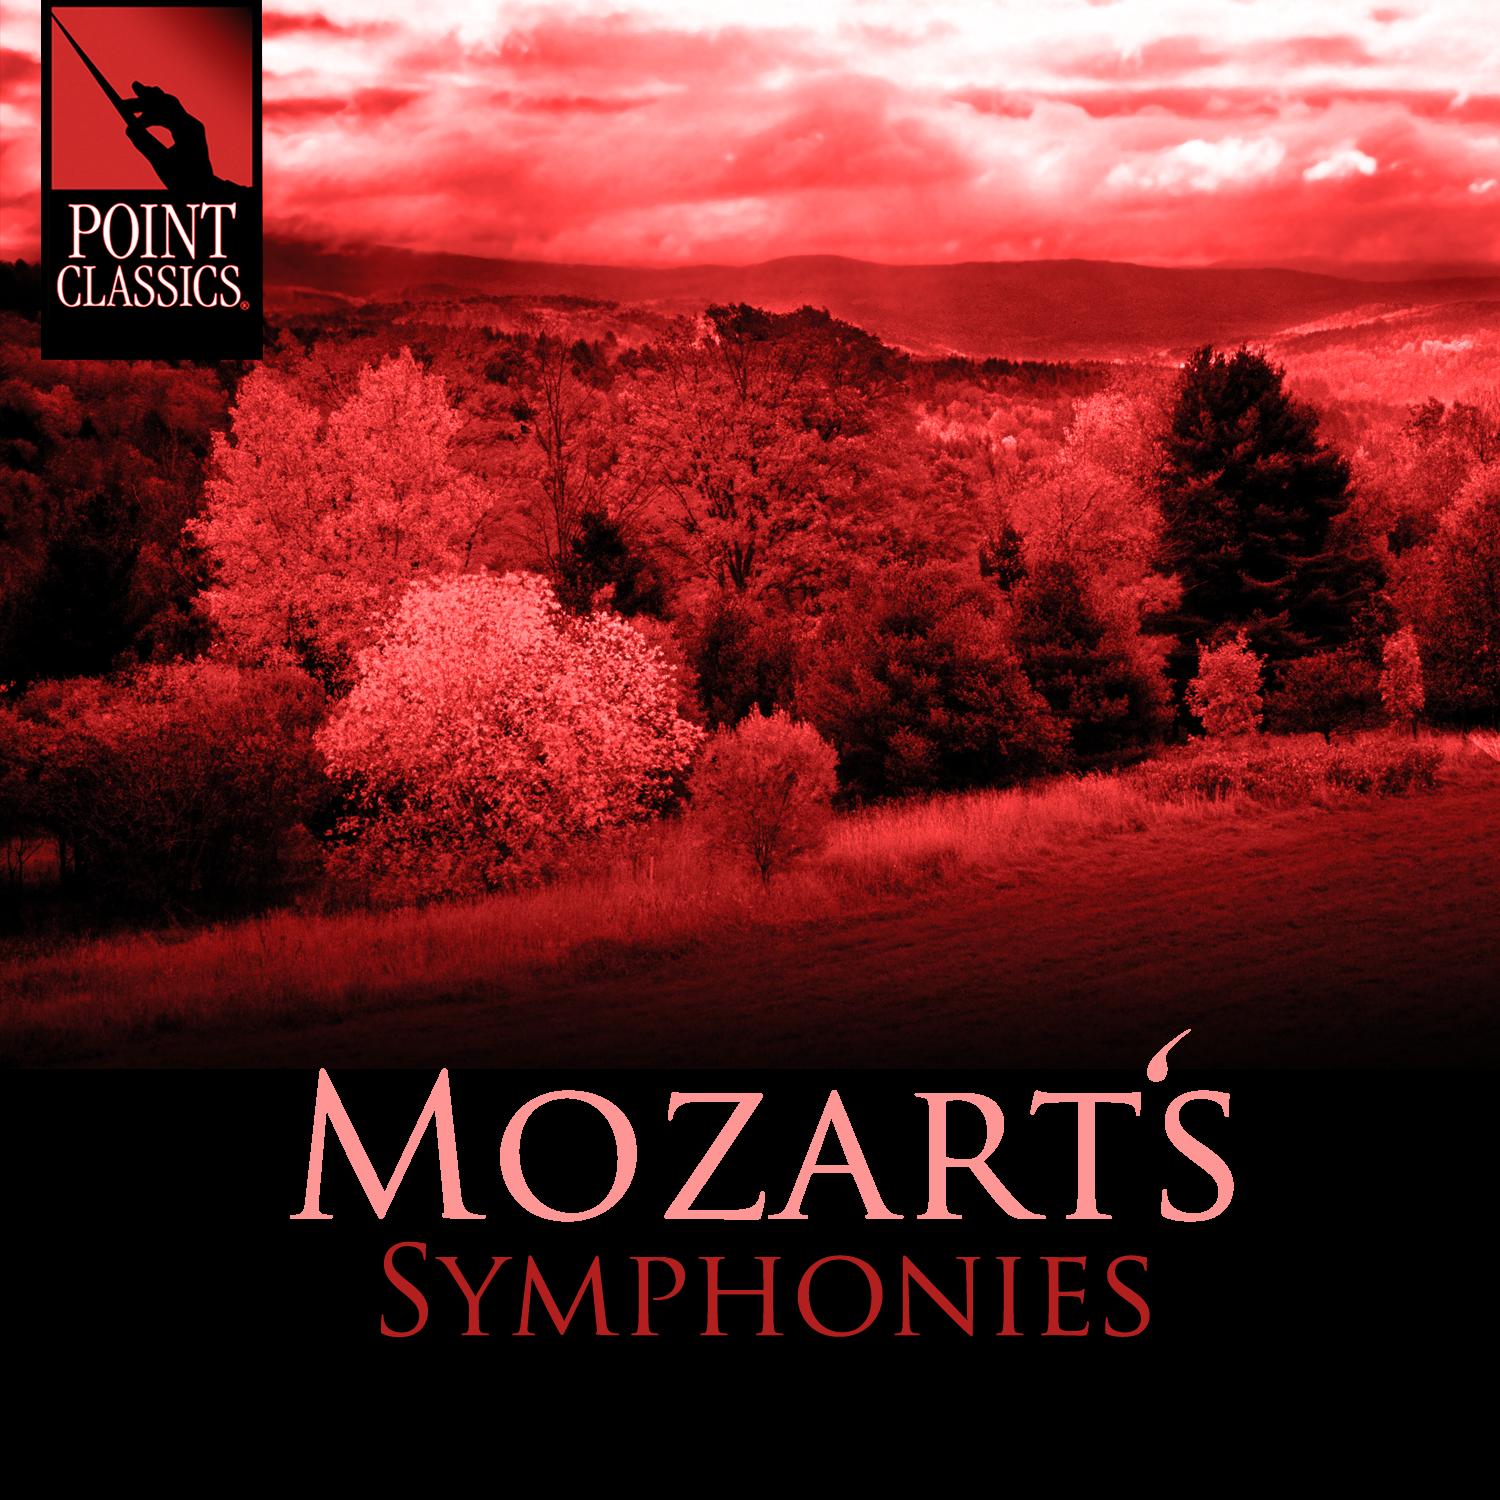 Mozart's Symphonies